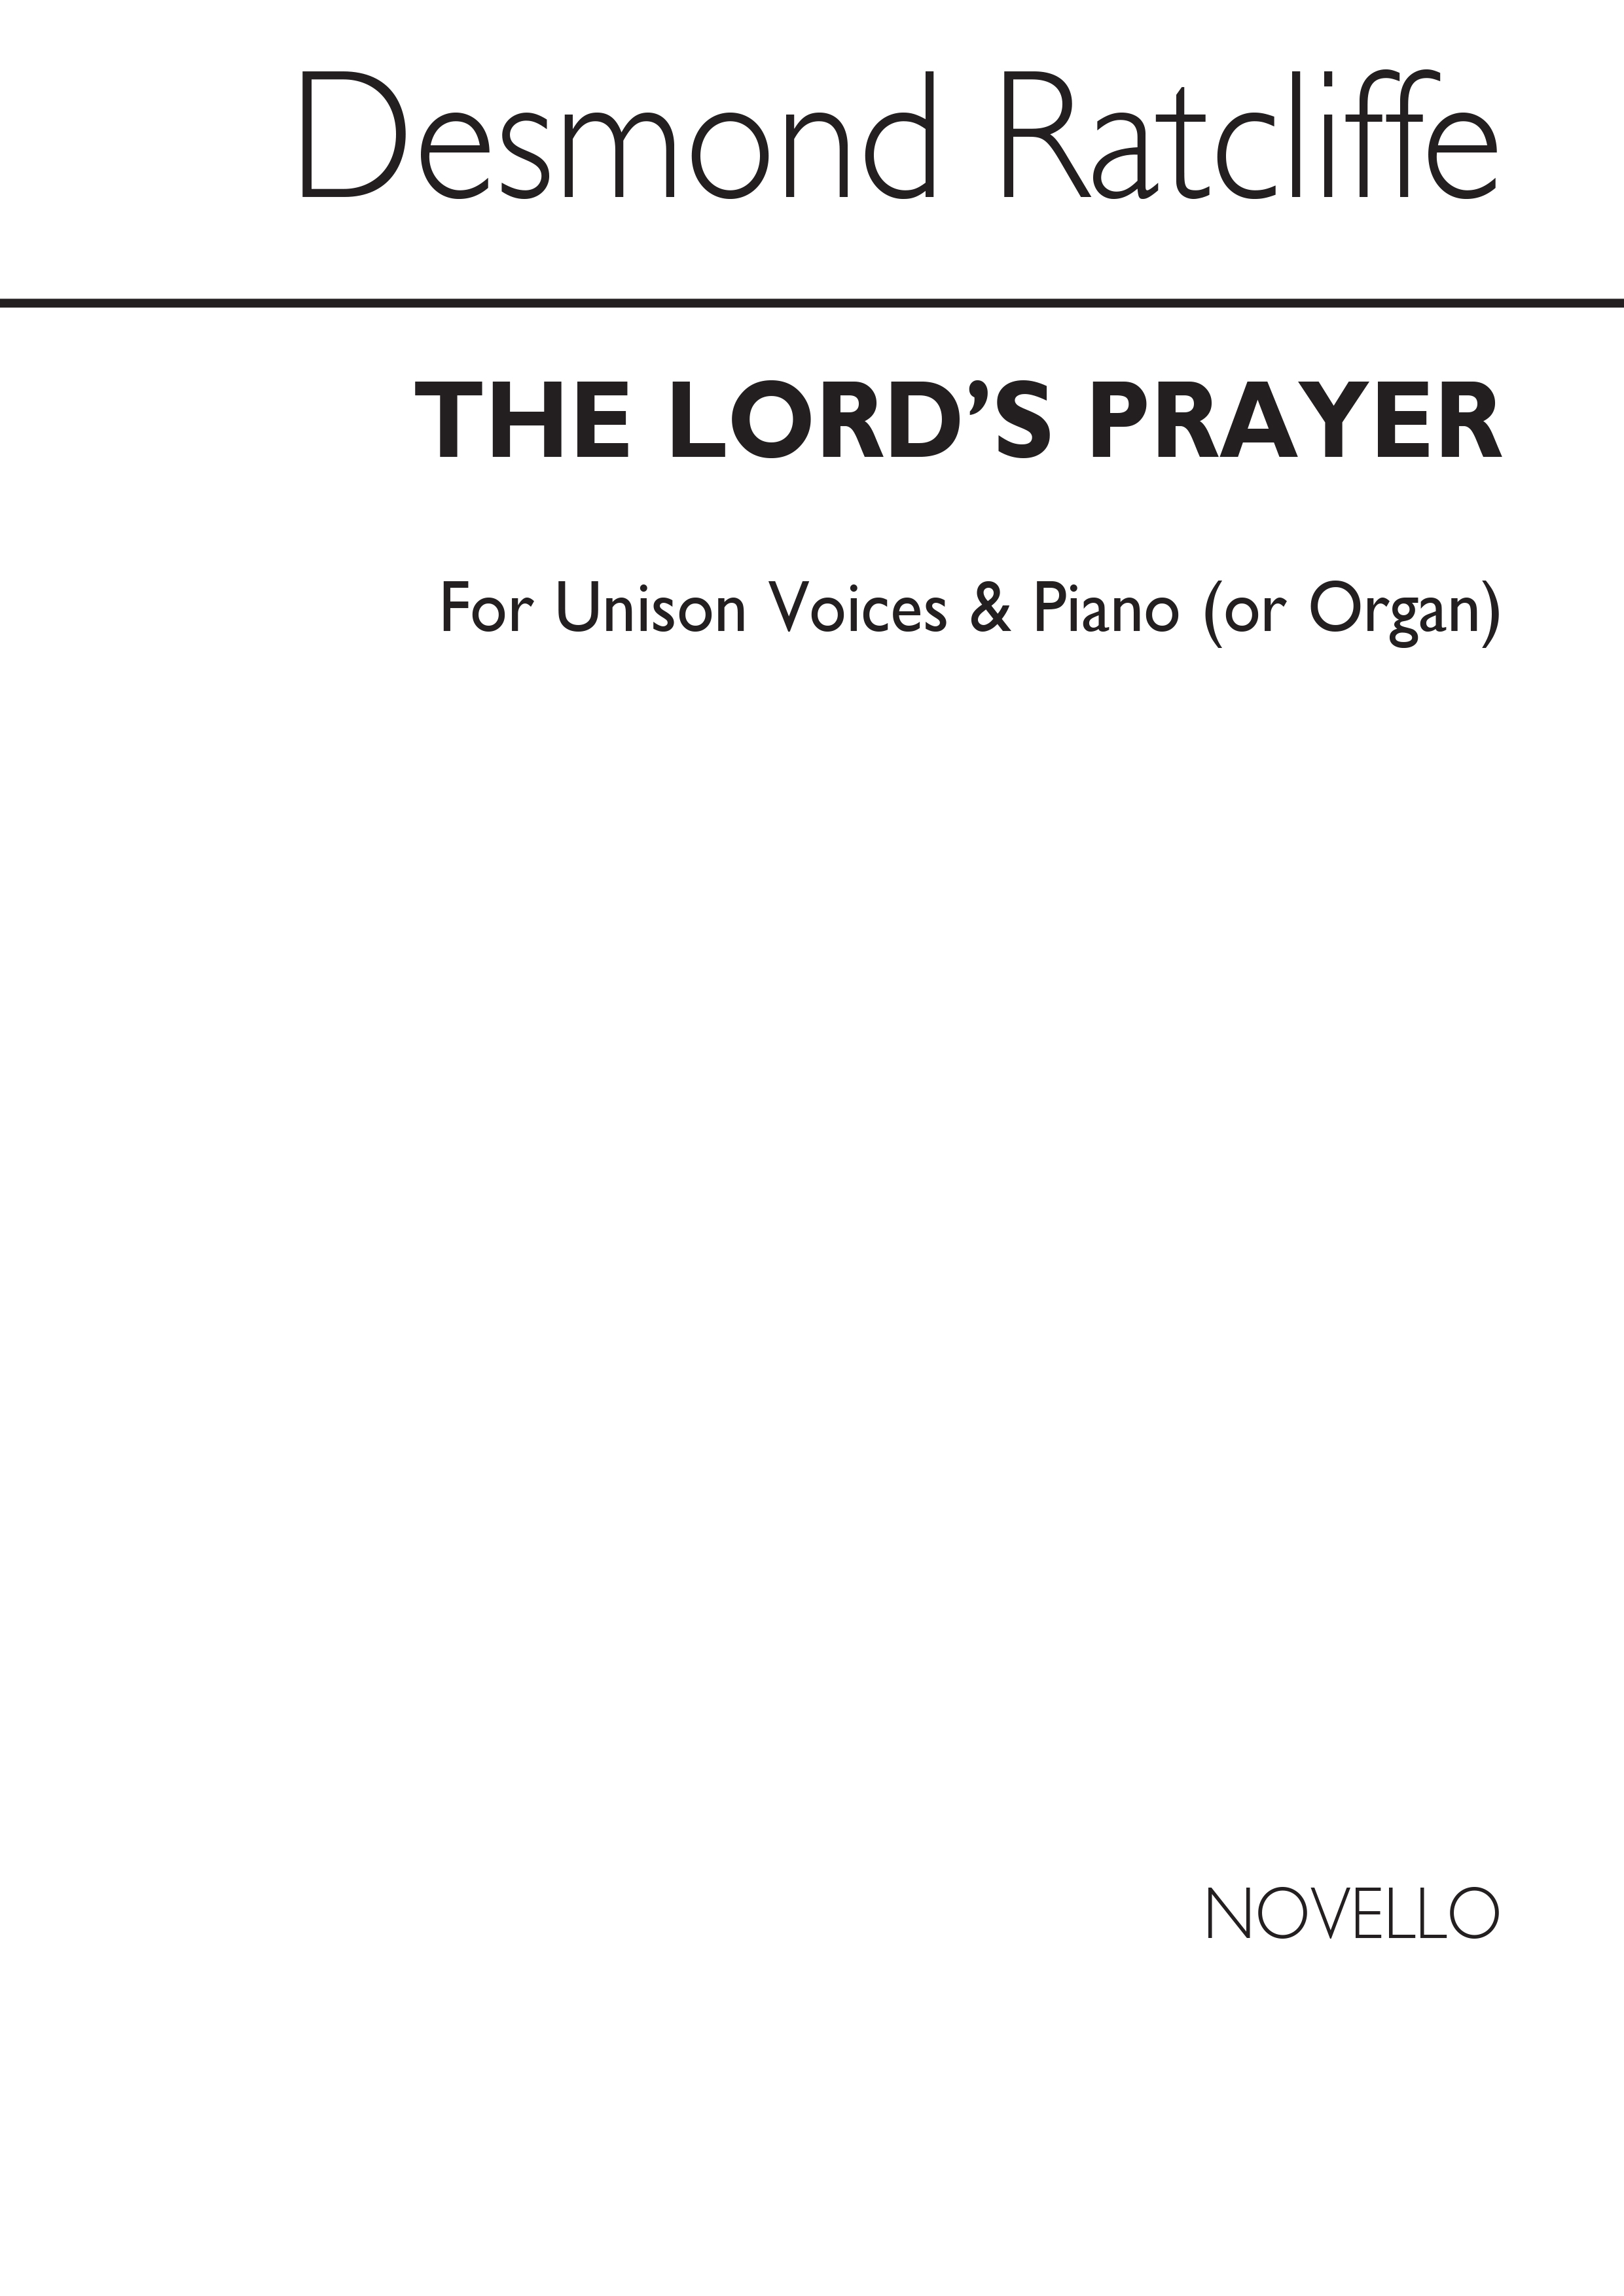 Desmond Ratcliffe: The Lord's Prayer Unison/Organ